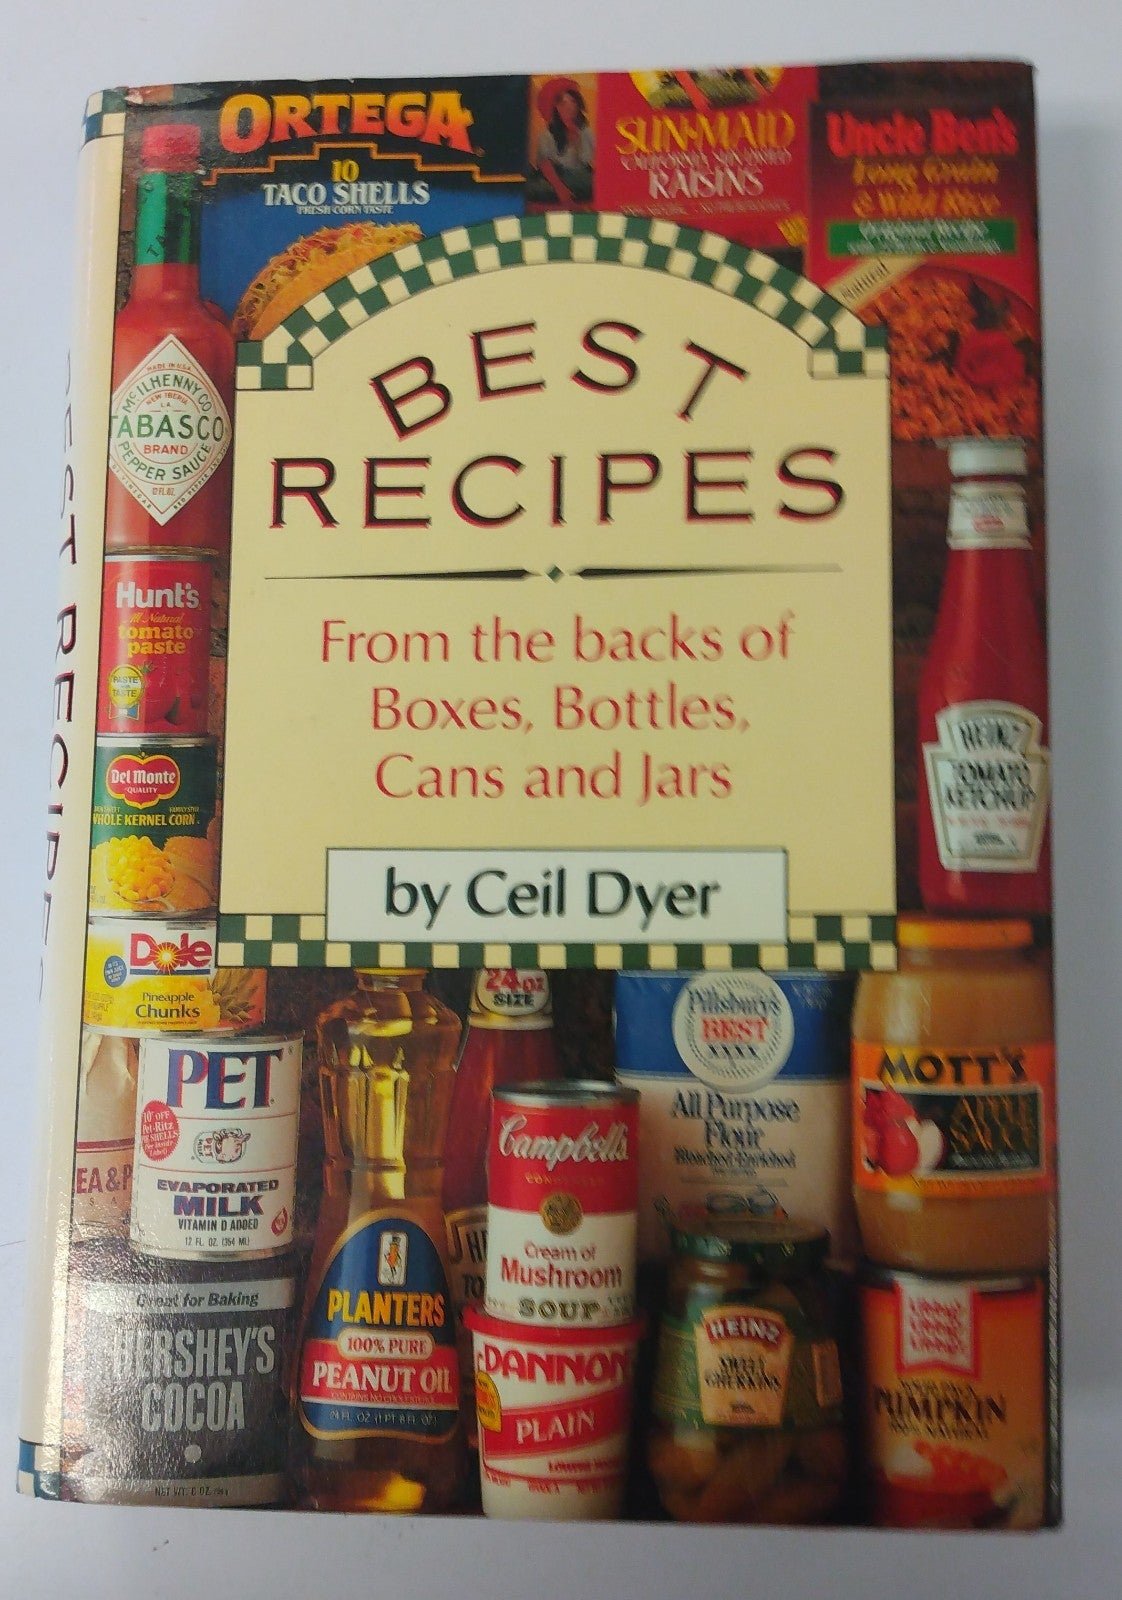 Best Recipes Cook Book maGROz0vA